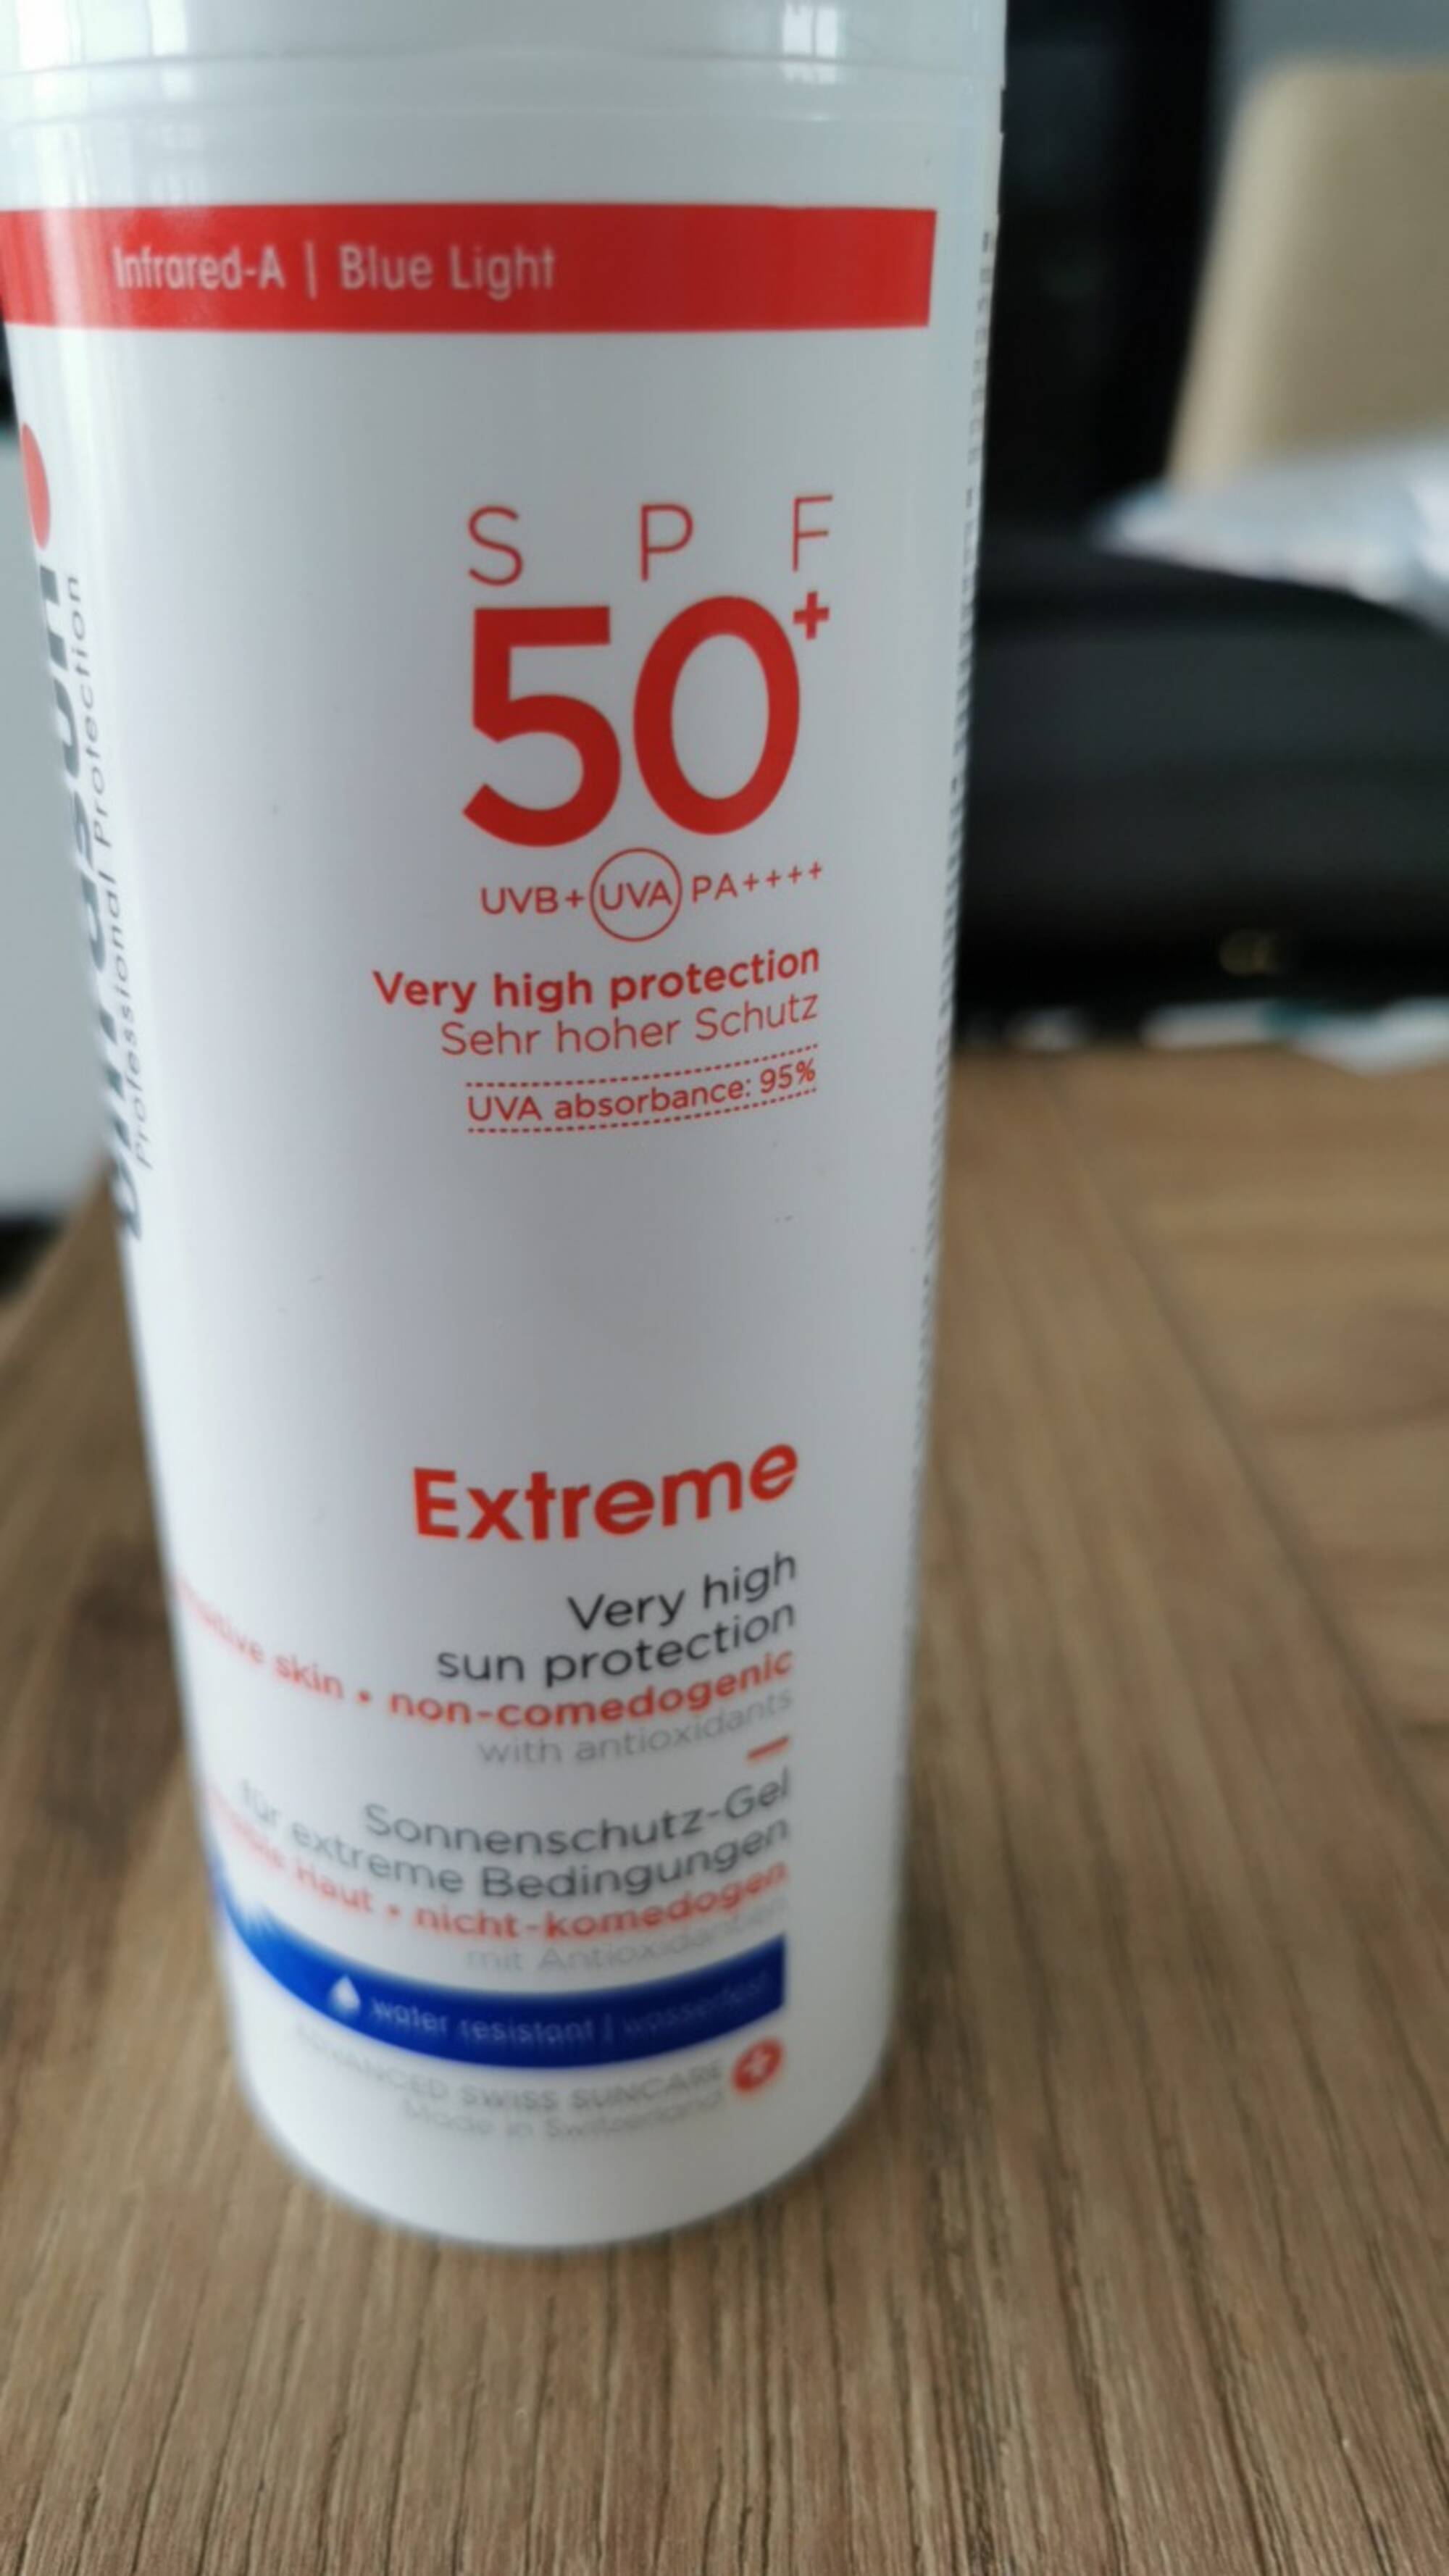 ULTRASUN - Extreme - Very high sun protection SPF 50+